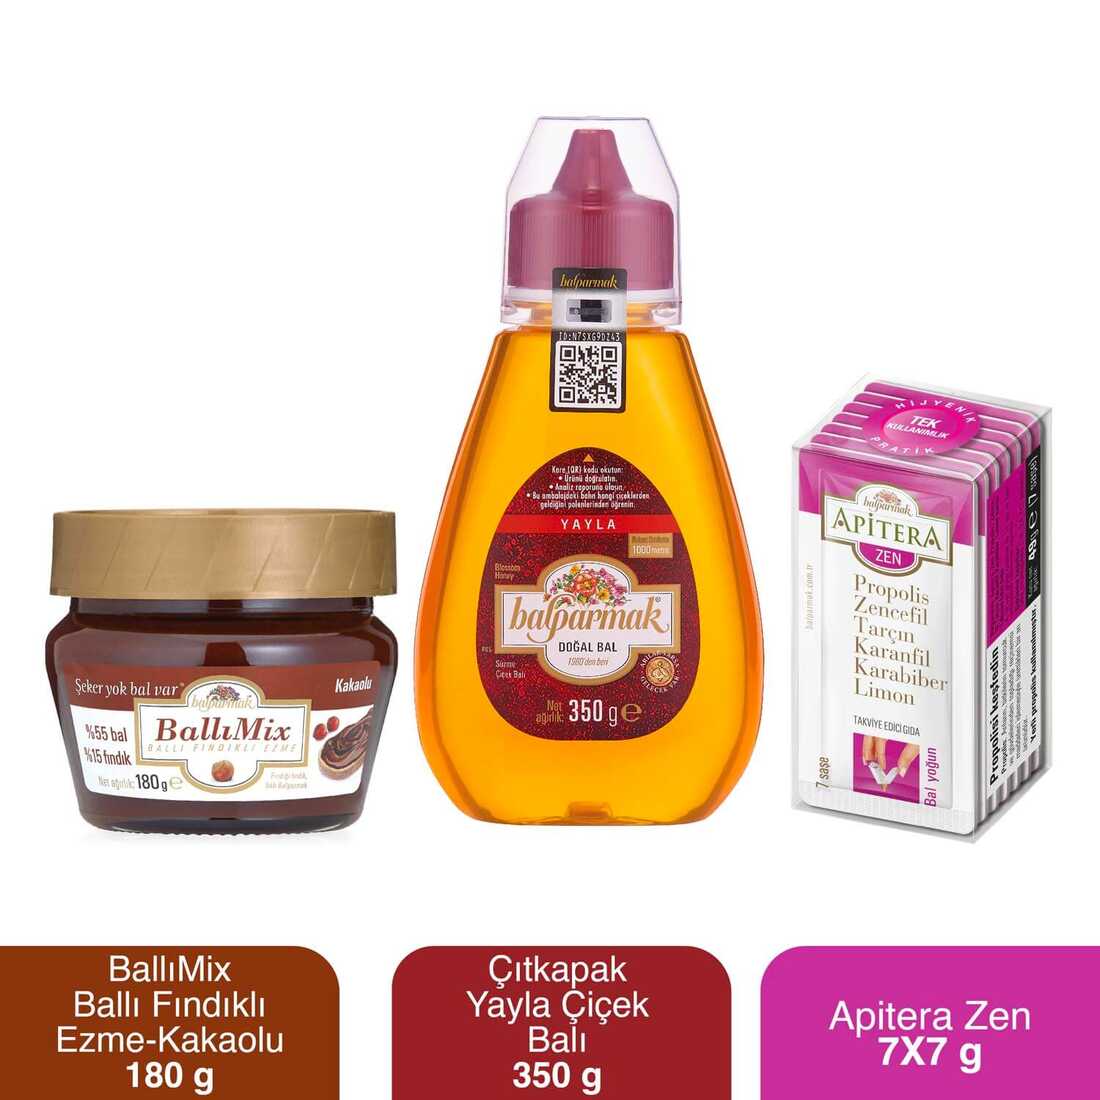 balparmak ballımix and Apitera and highland honey package 1